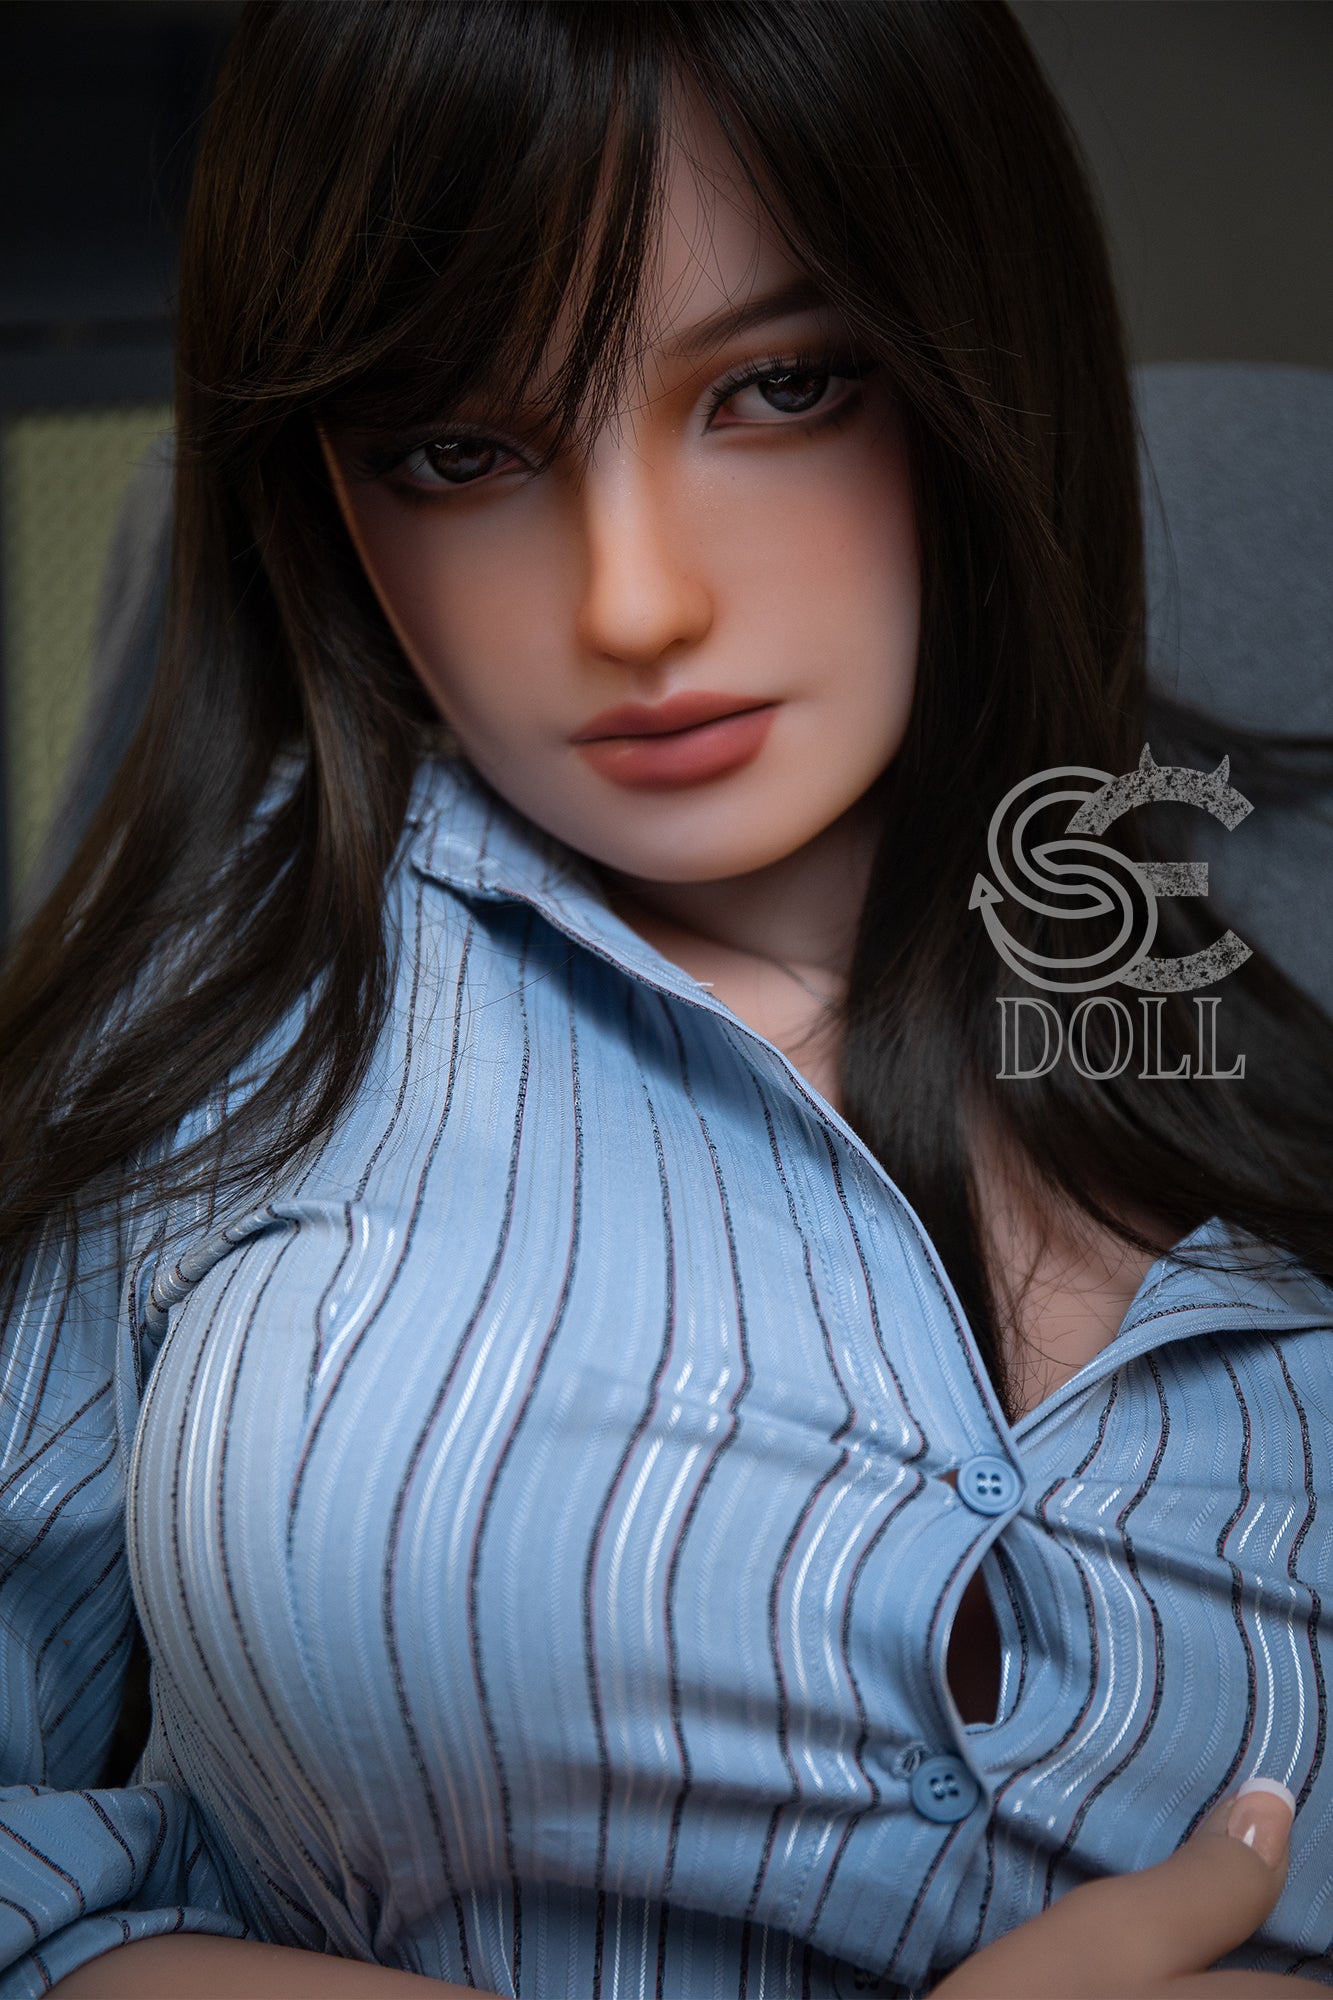 SEDOLL 157 cm H TPE - Amina | Buy Sex Dolls at DOLLS ACTUALLY